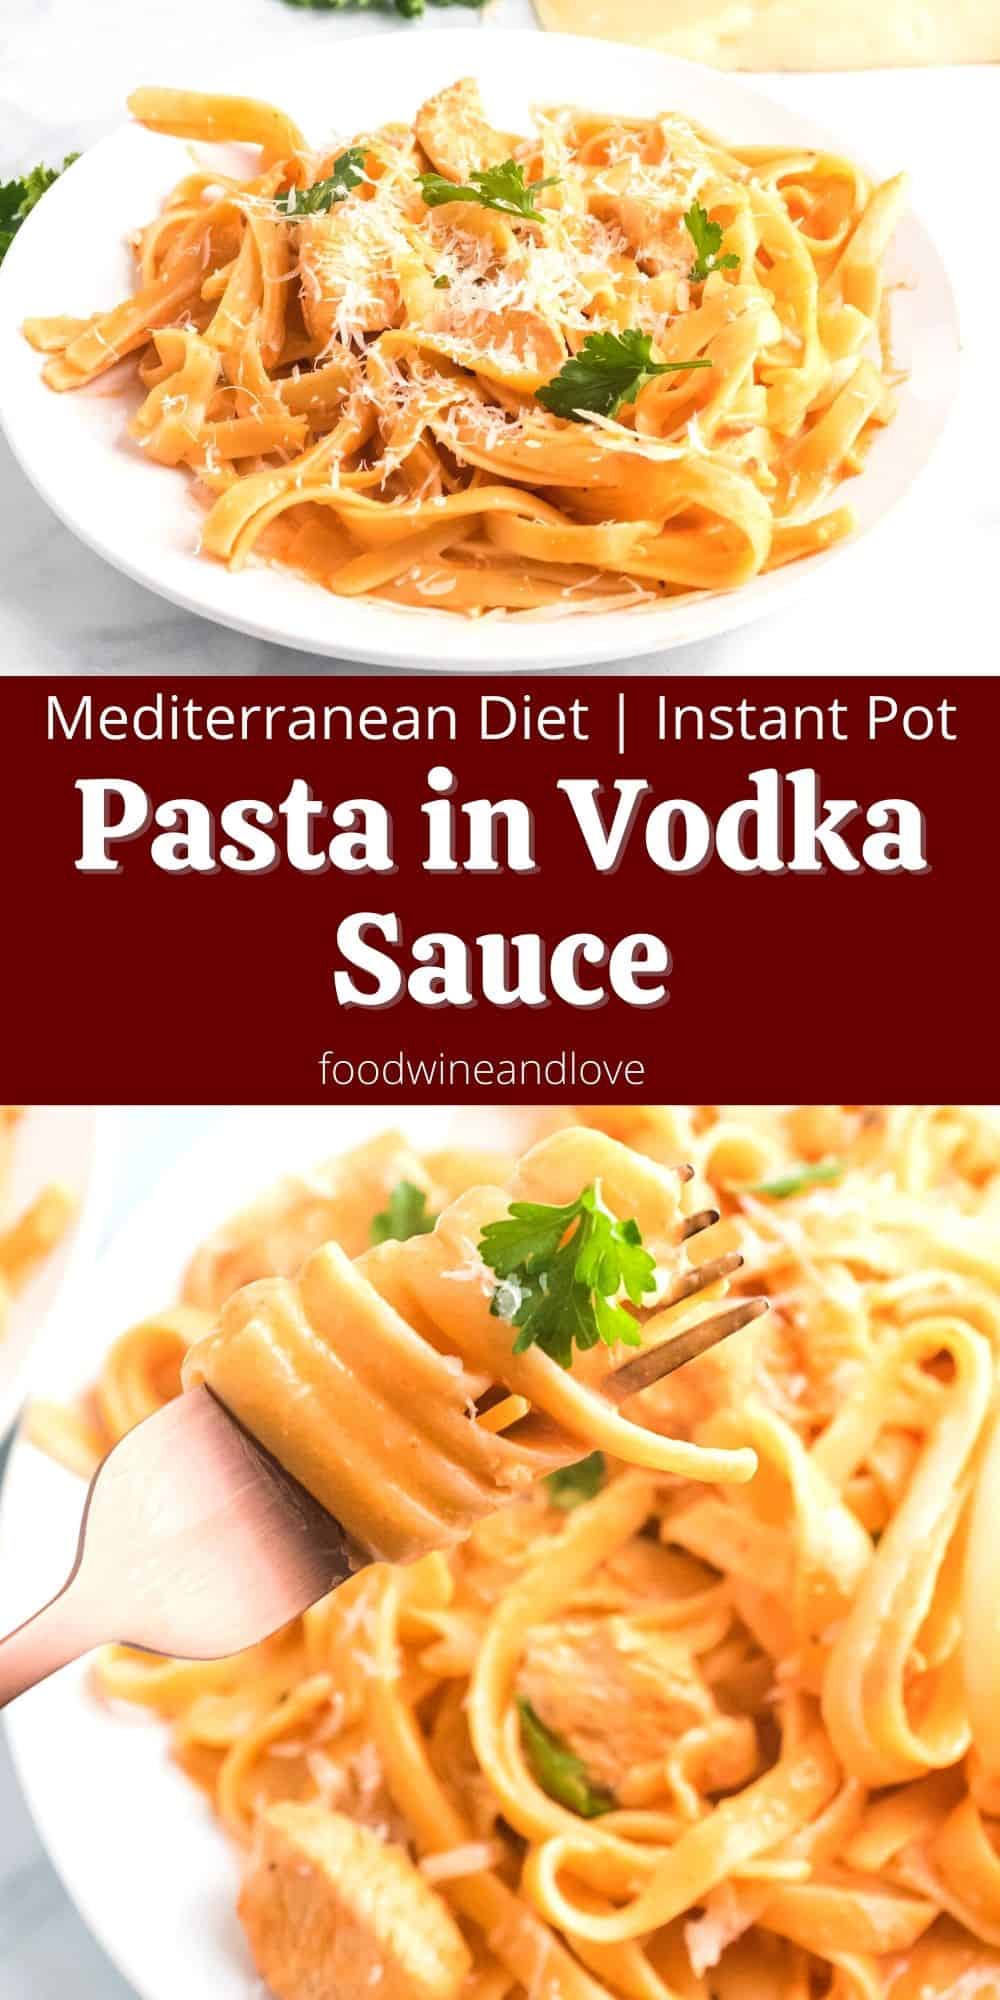 Instant Pot Pasta in Vodka Sauce